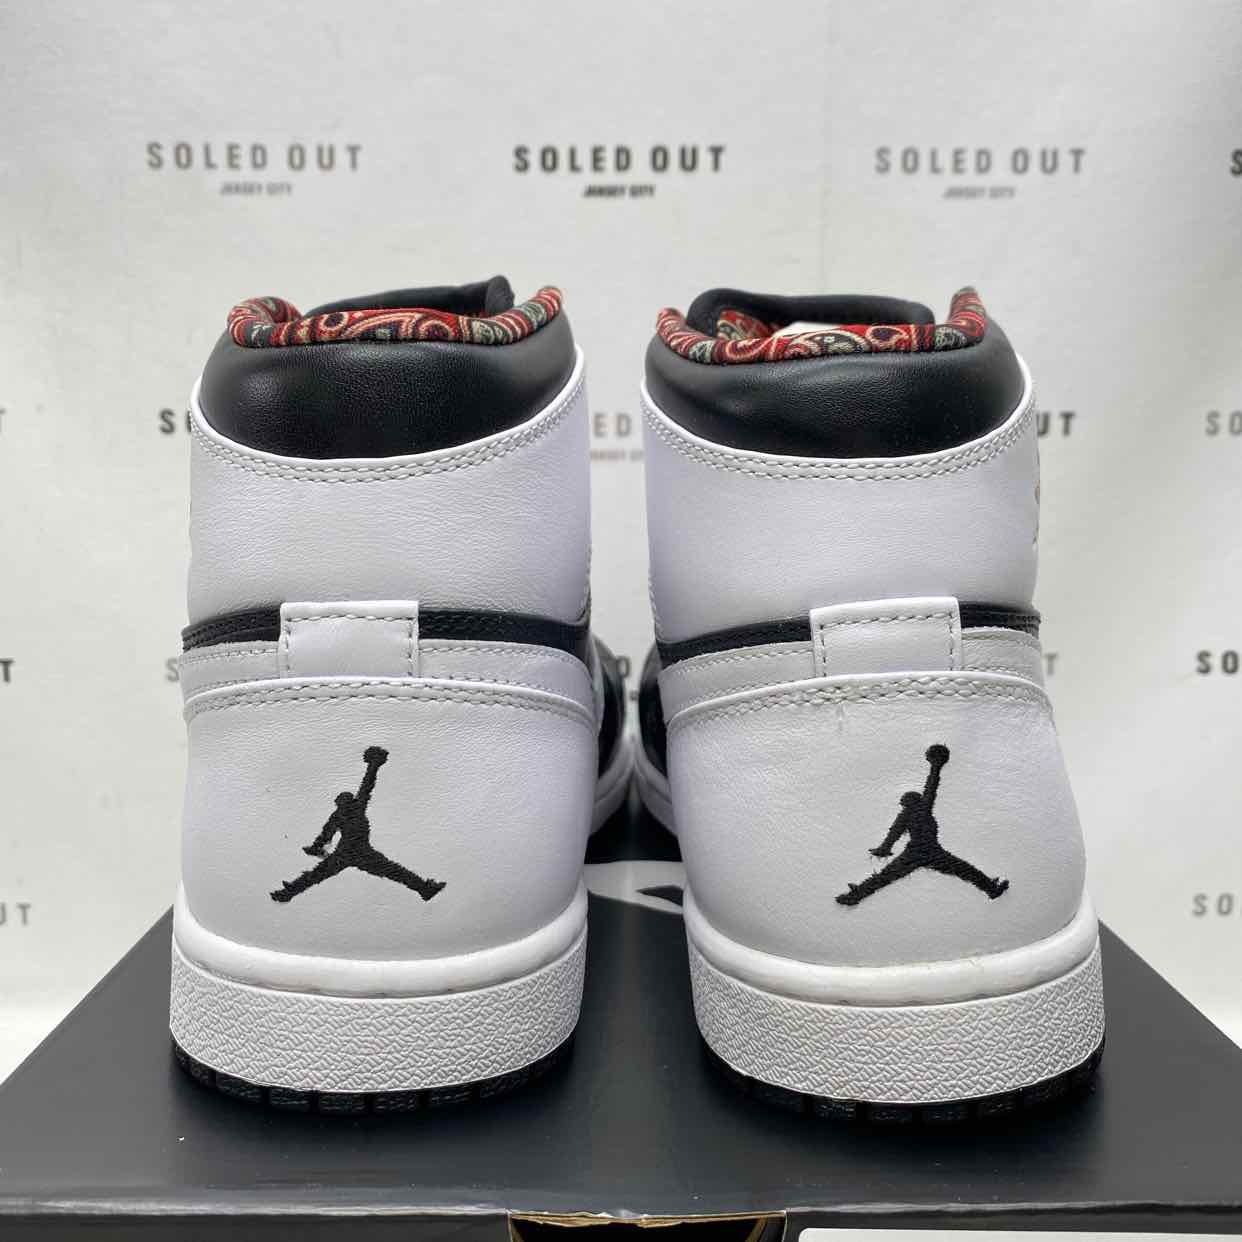 Air Jordan 1 Retro High RTTG "VEGAS" 2012 New (Cond) Original Box Size 8